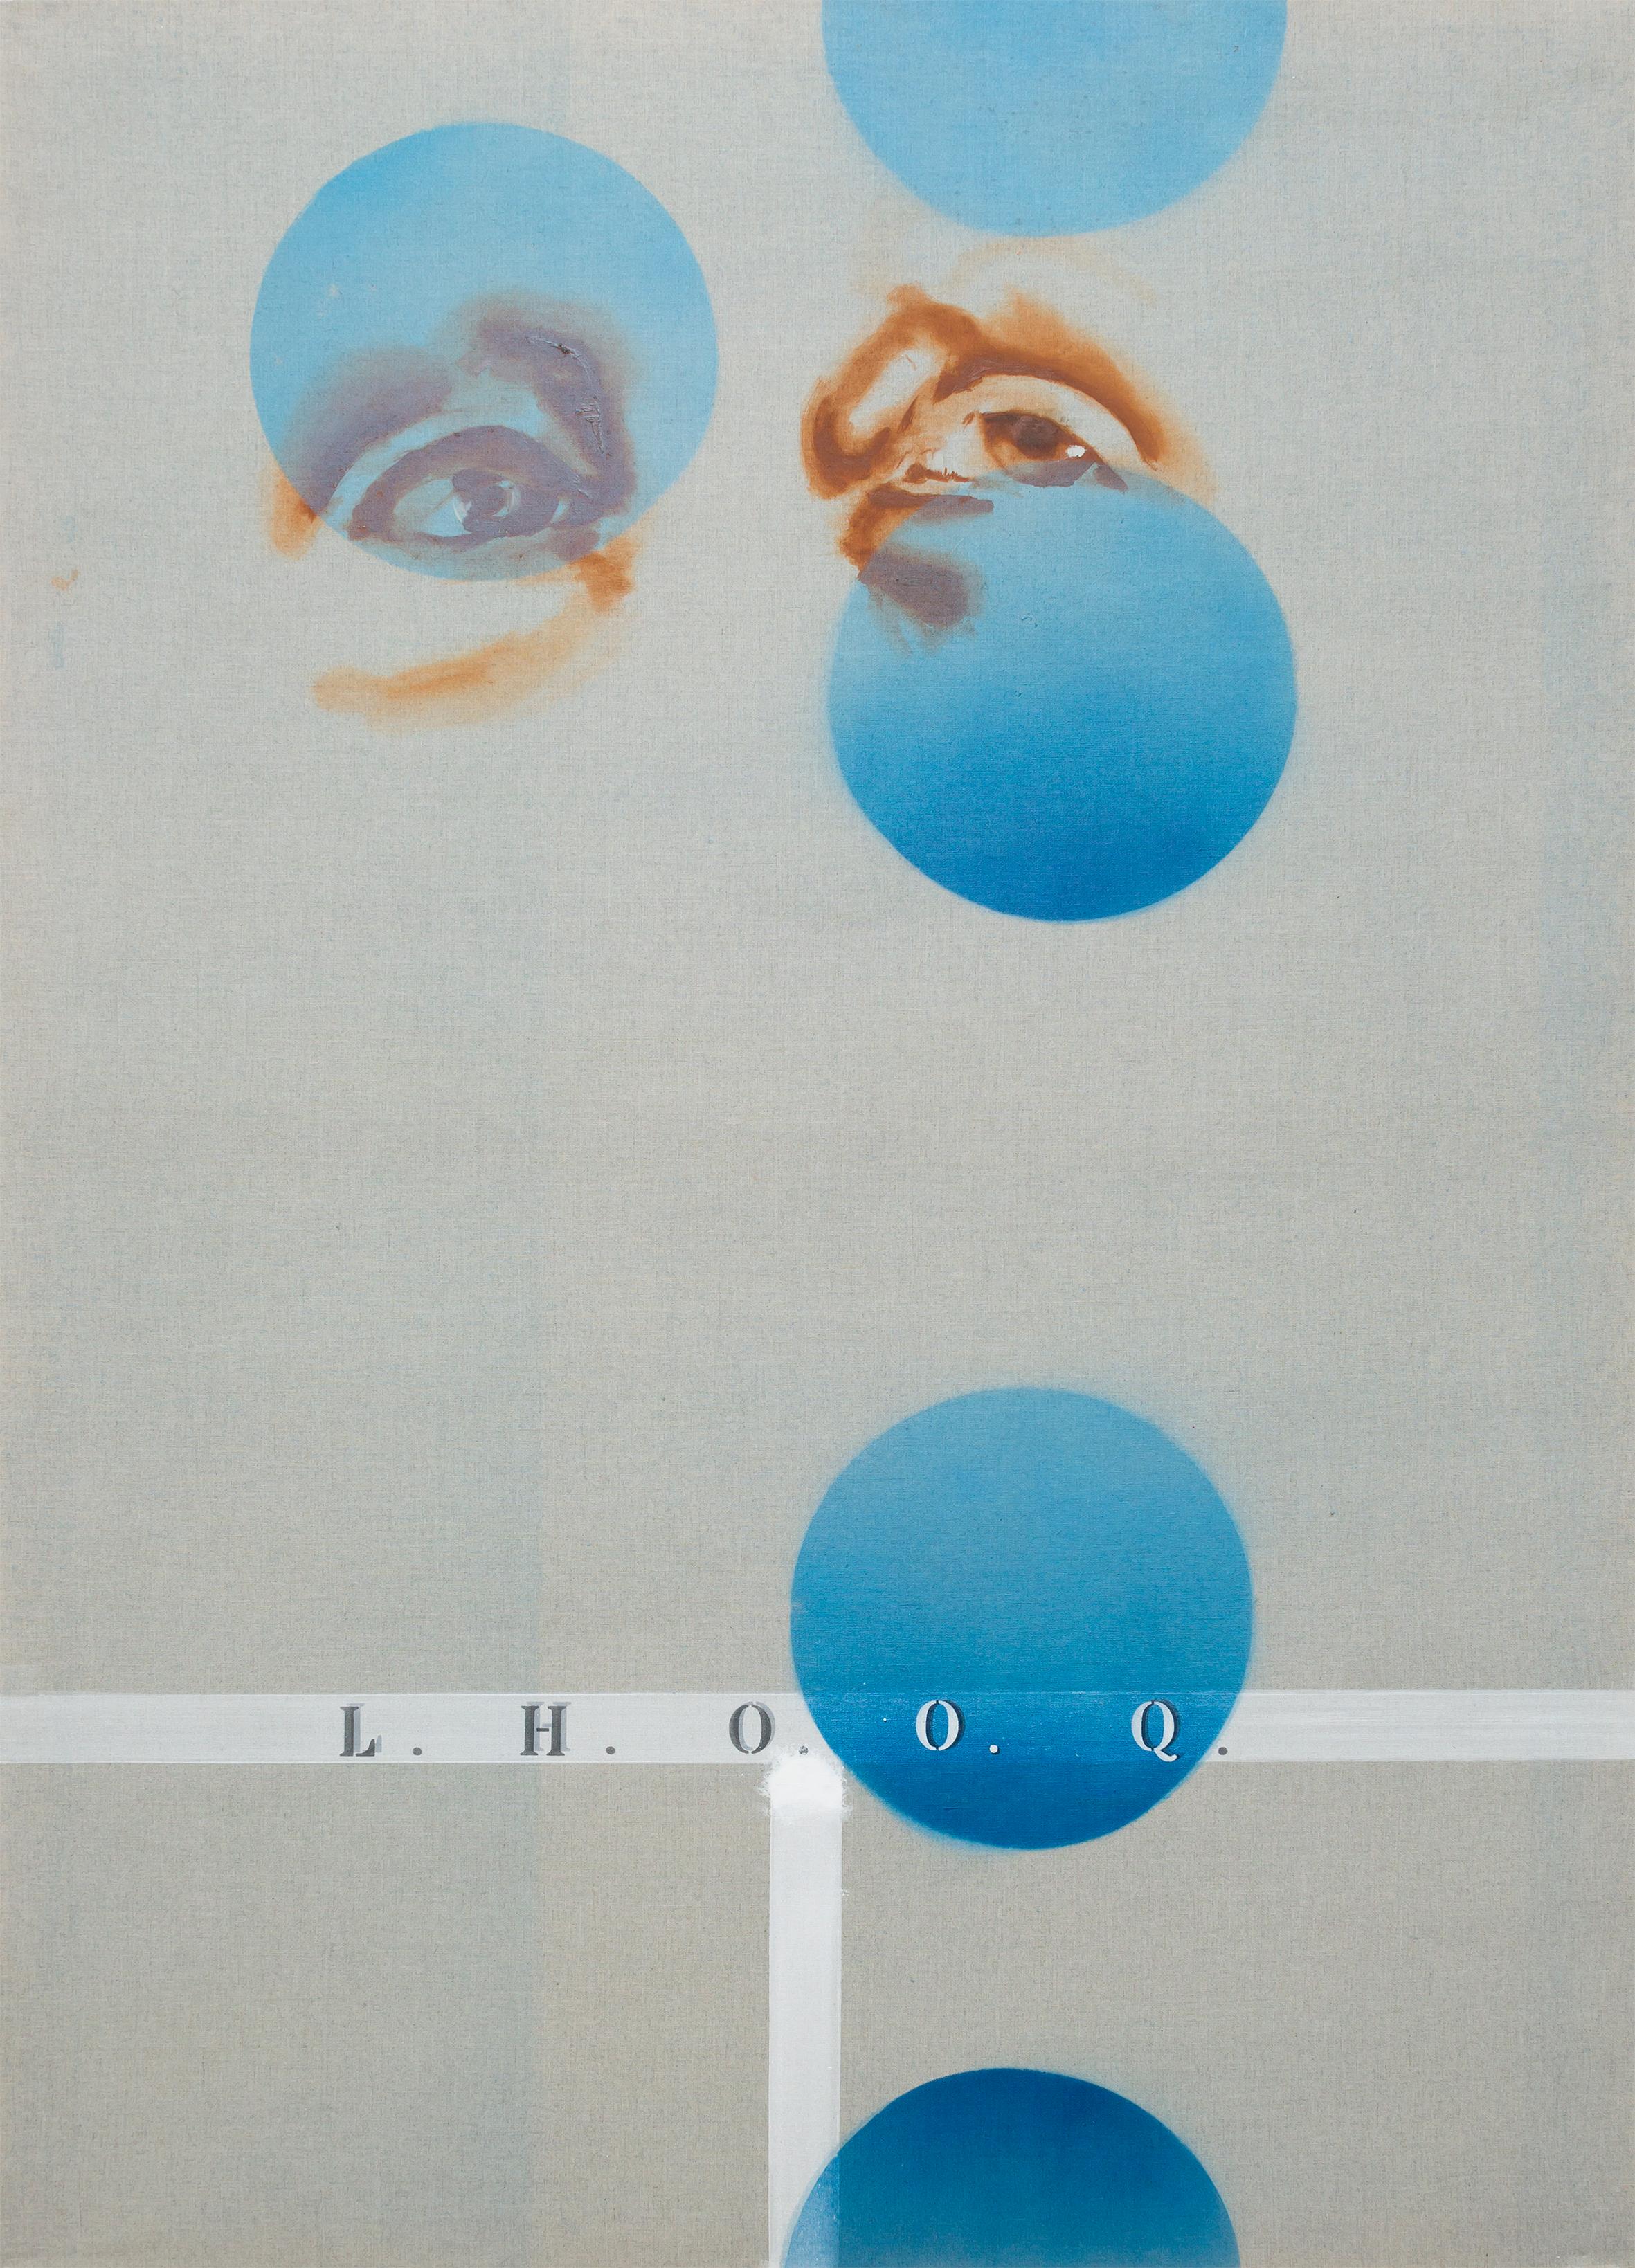 Bogumił Książek  Abstract Painting - L.H.O.O.Q. - Series Duchamp, Modern Figurative Painting, Dada Art, Minimalism